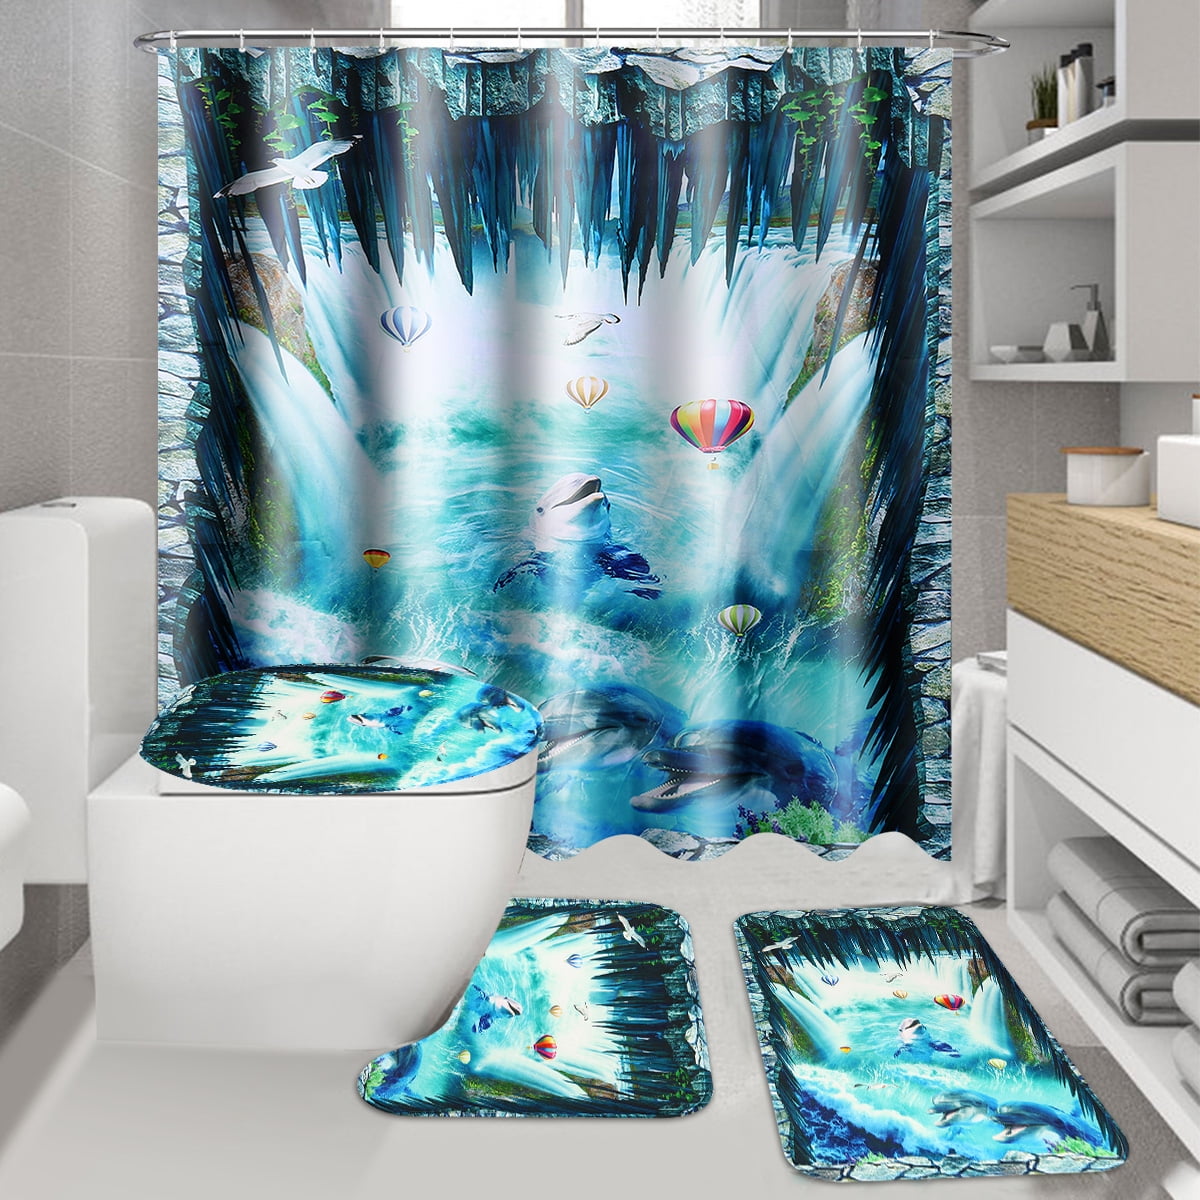 4pcs Waterproof Bathroom Shower Curtain Anti-Slip Bath Mat Set Toilet Seat Cover 